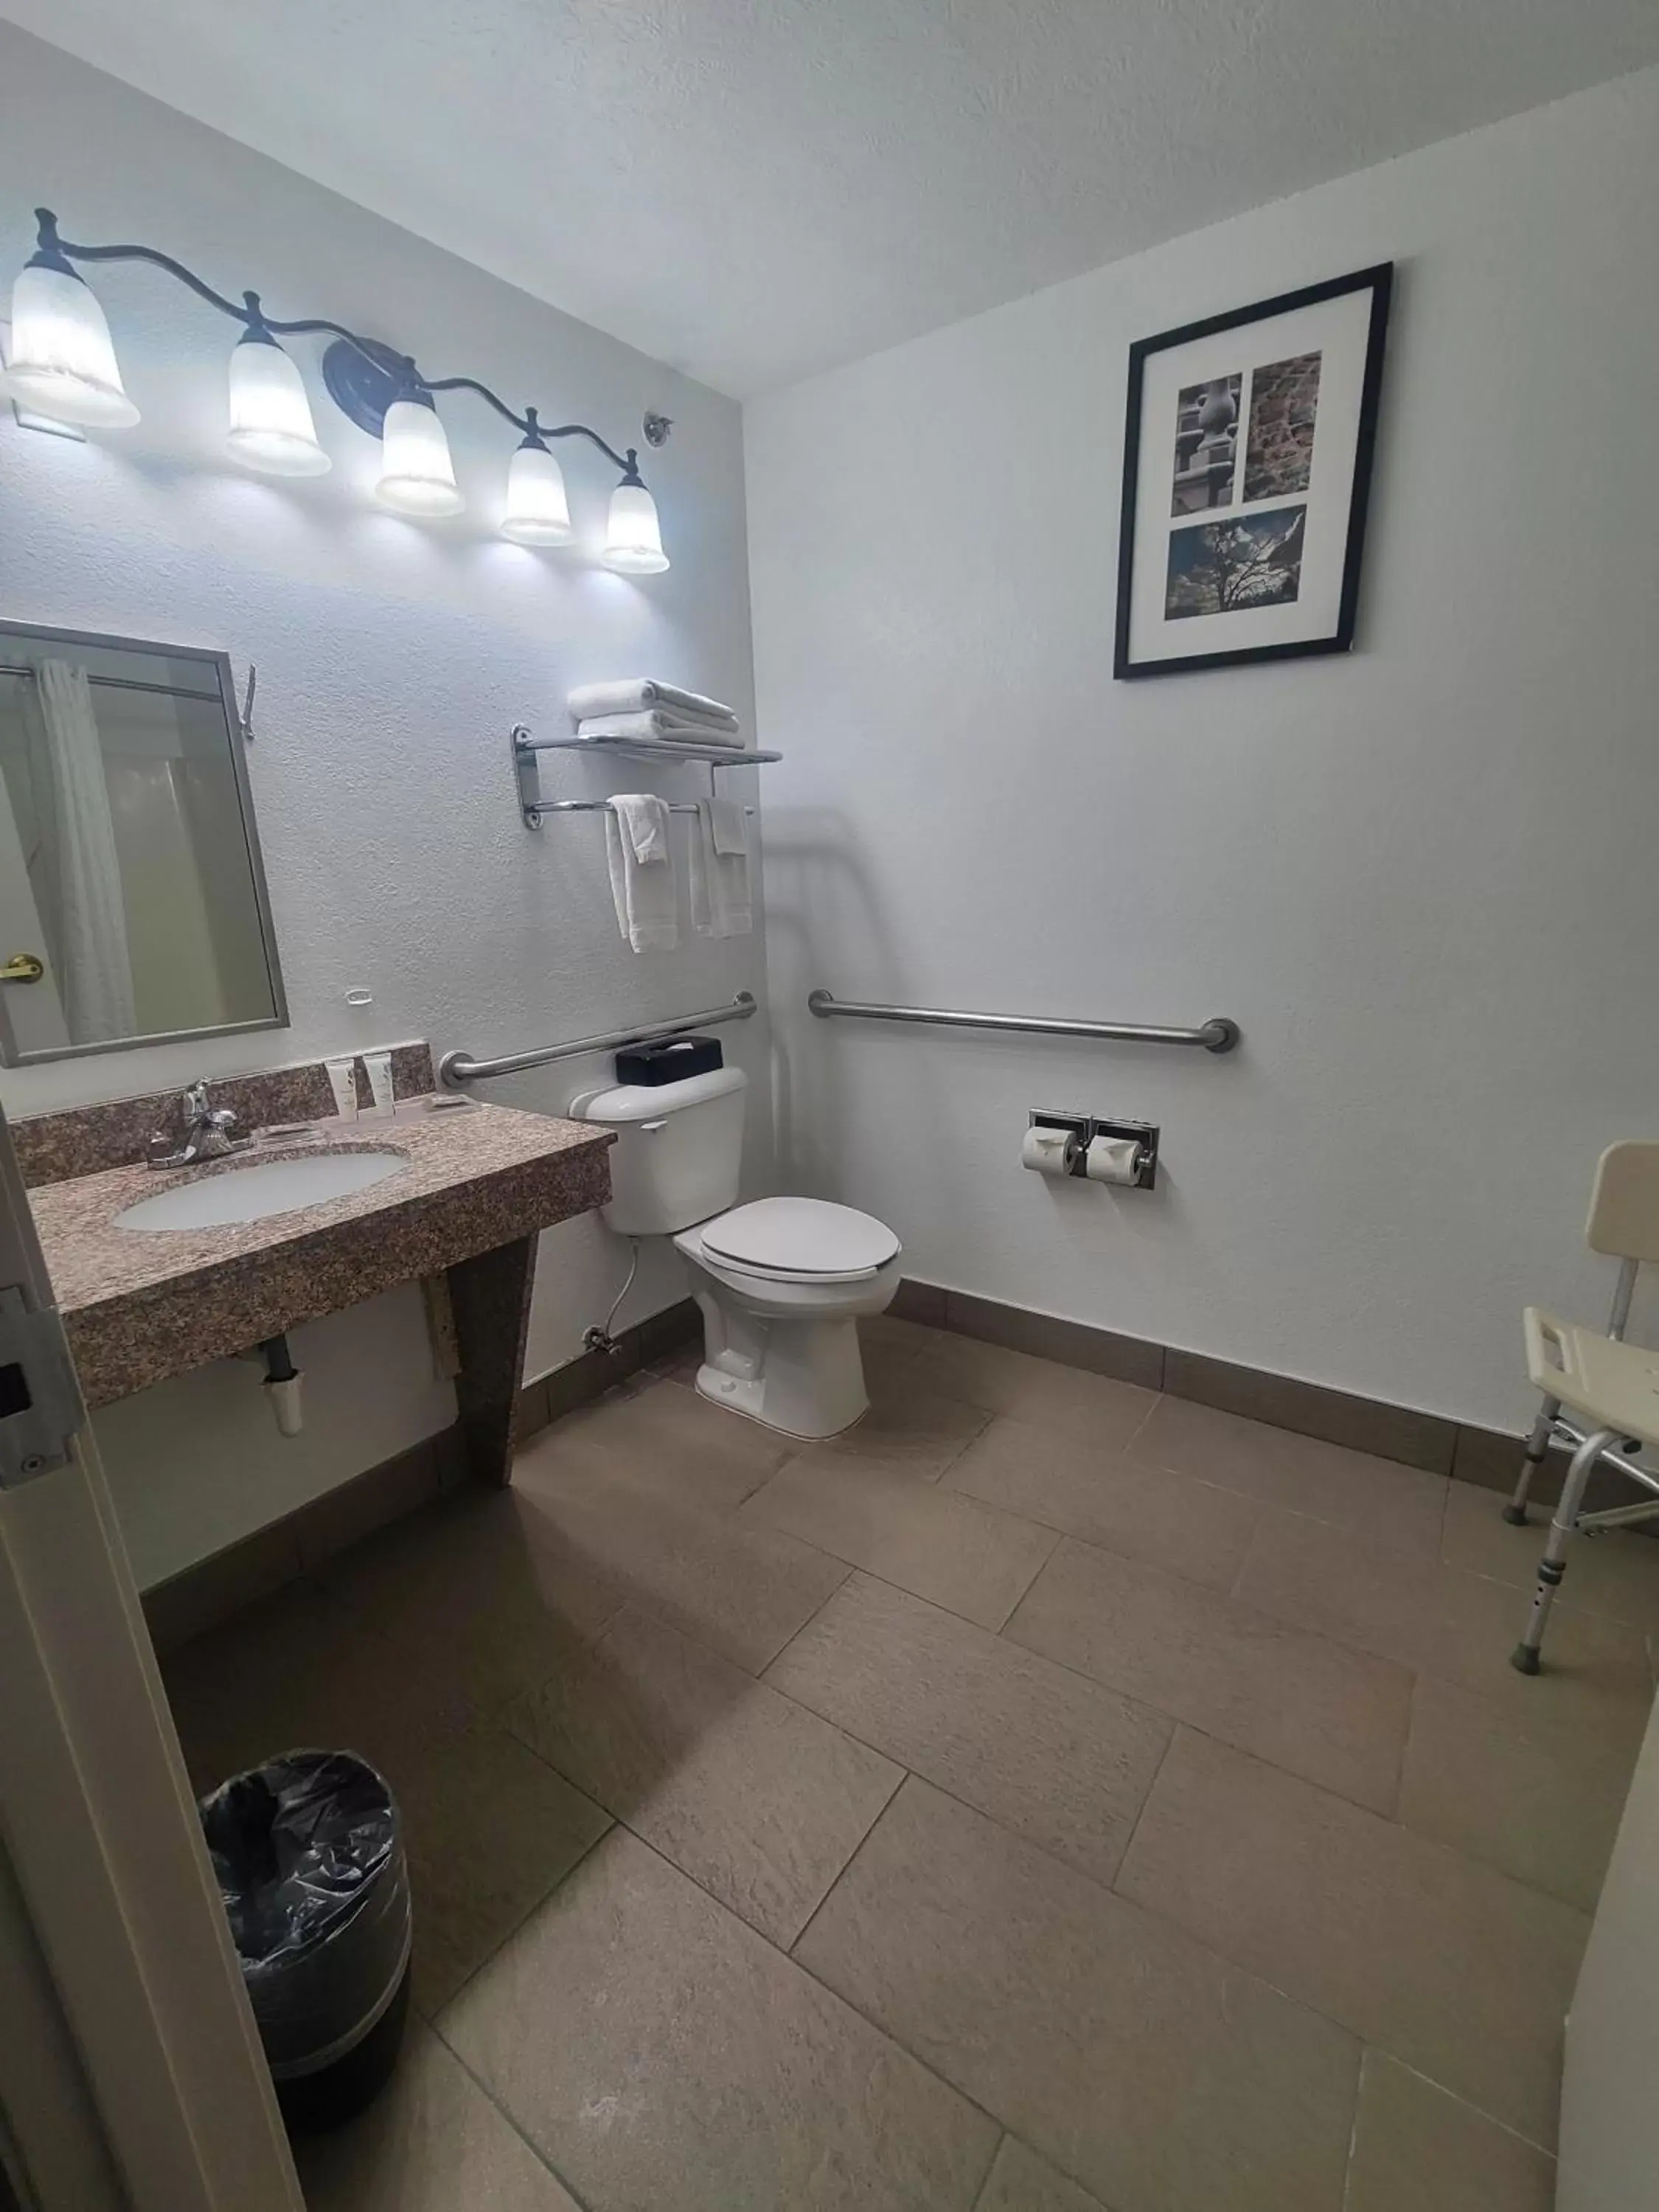 Bathroom in Country Inn & Suites by Radisson, Paducah, KY